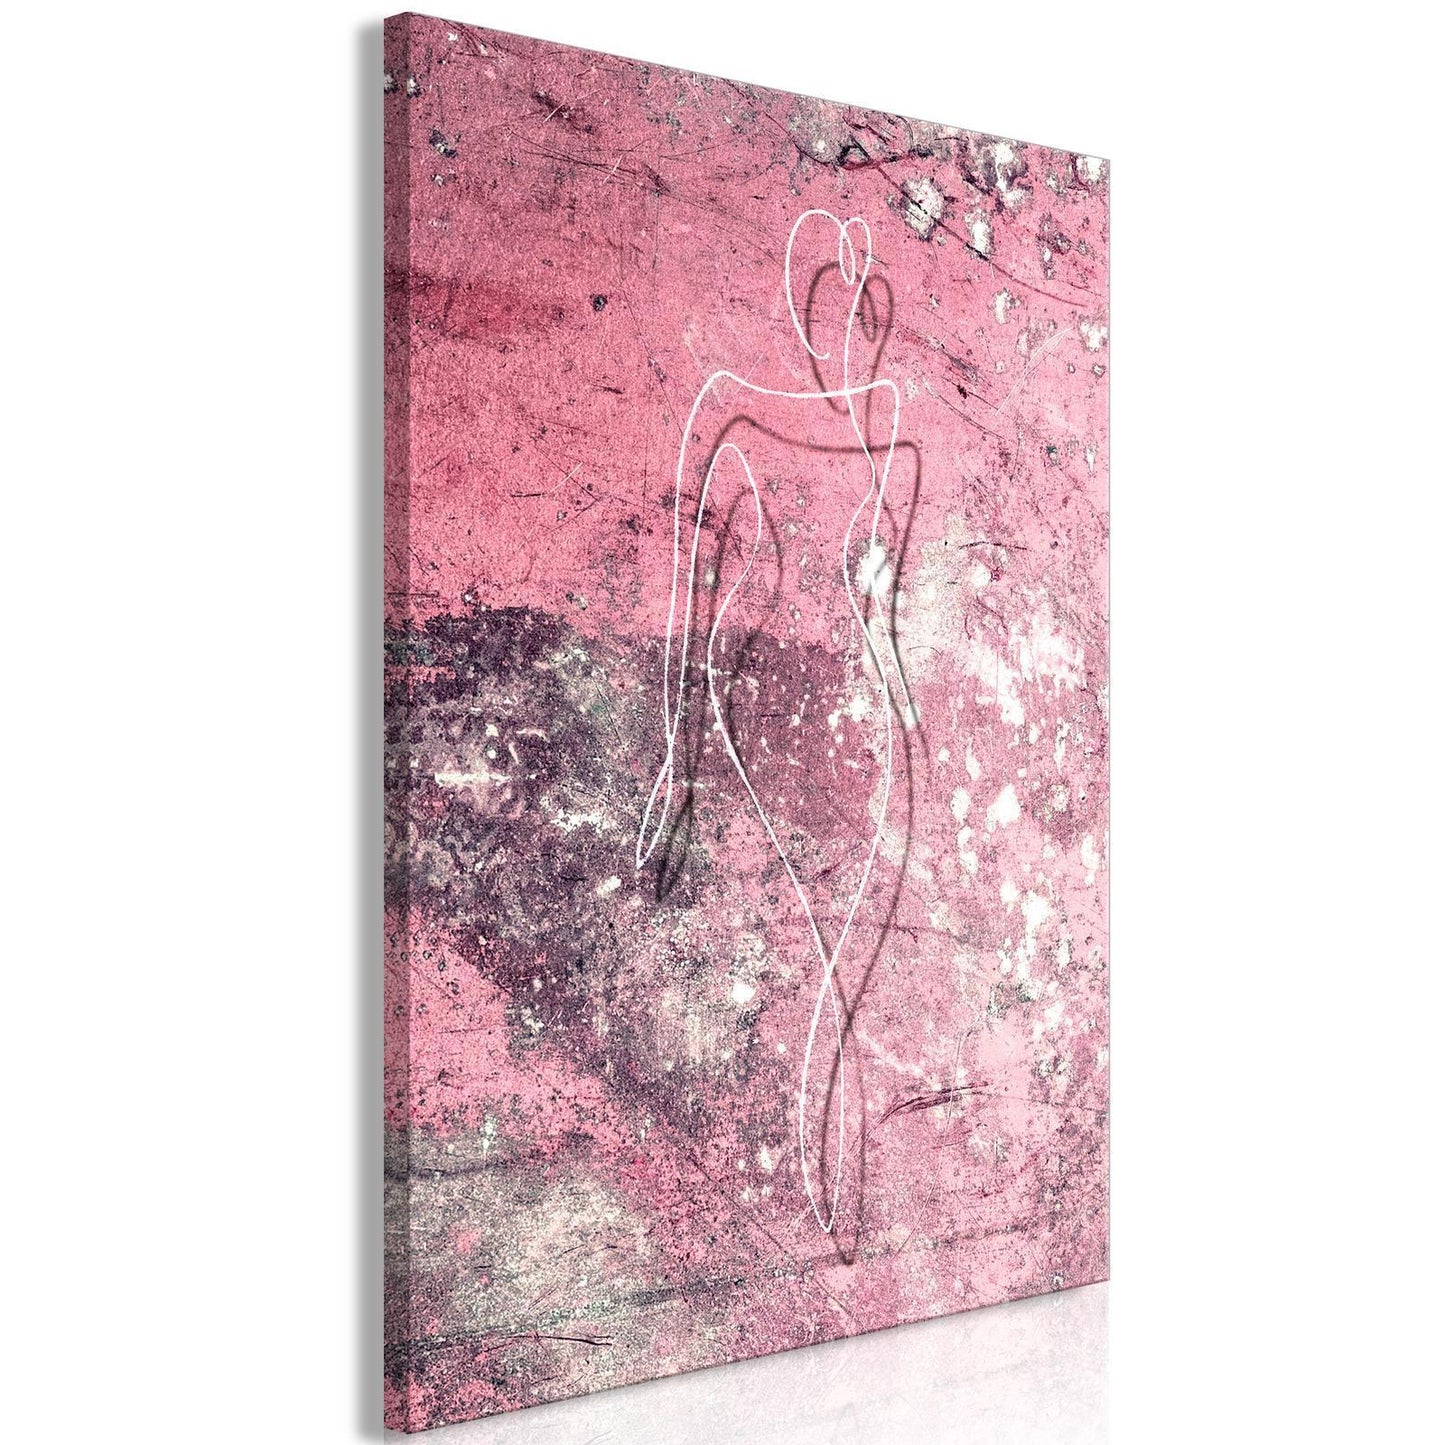 Schilderij - Figure on Pink Background (1-part) - Female Silhouette in Marble